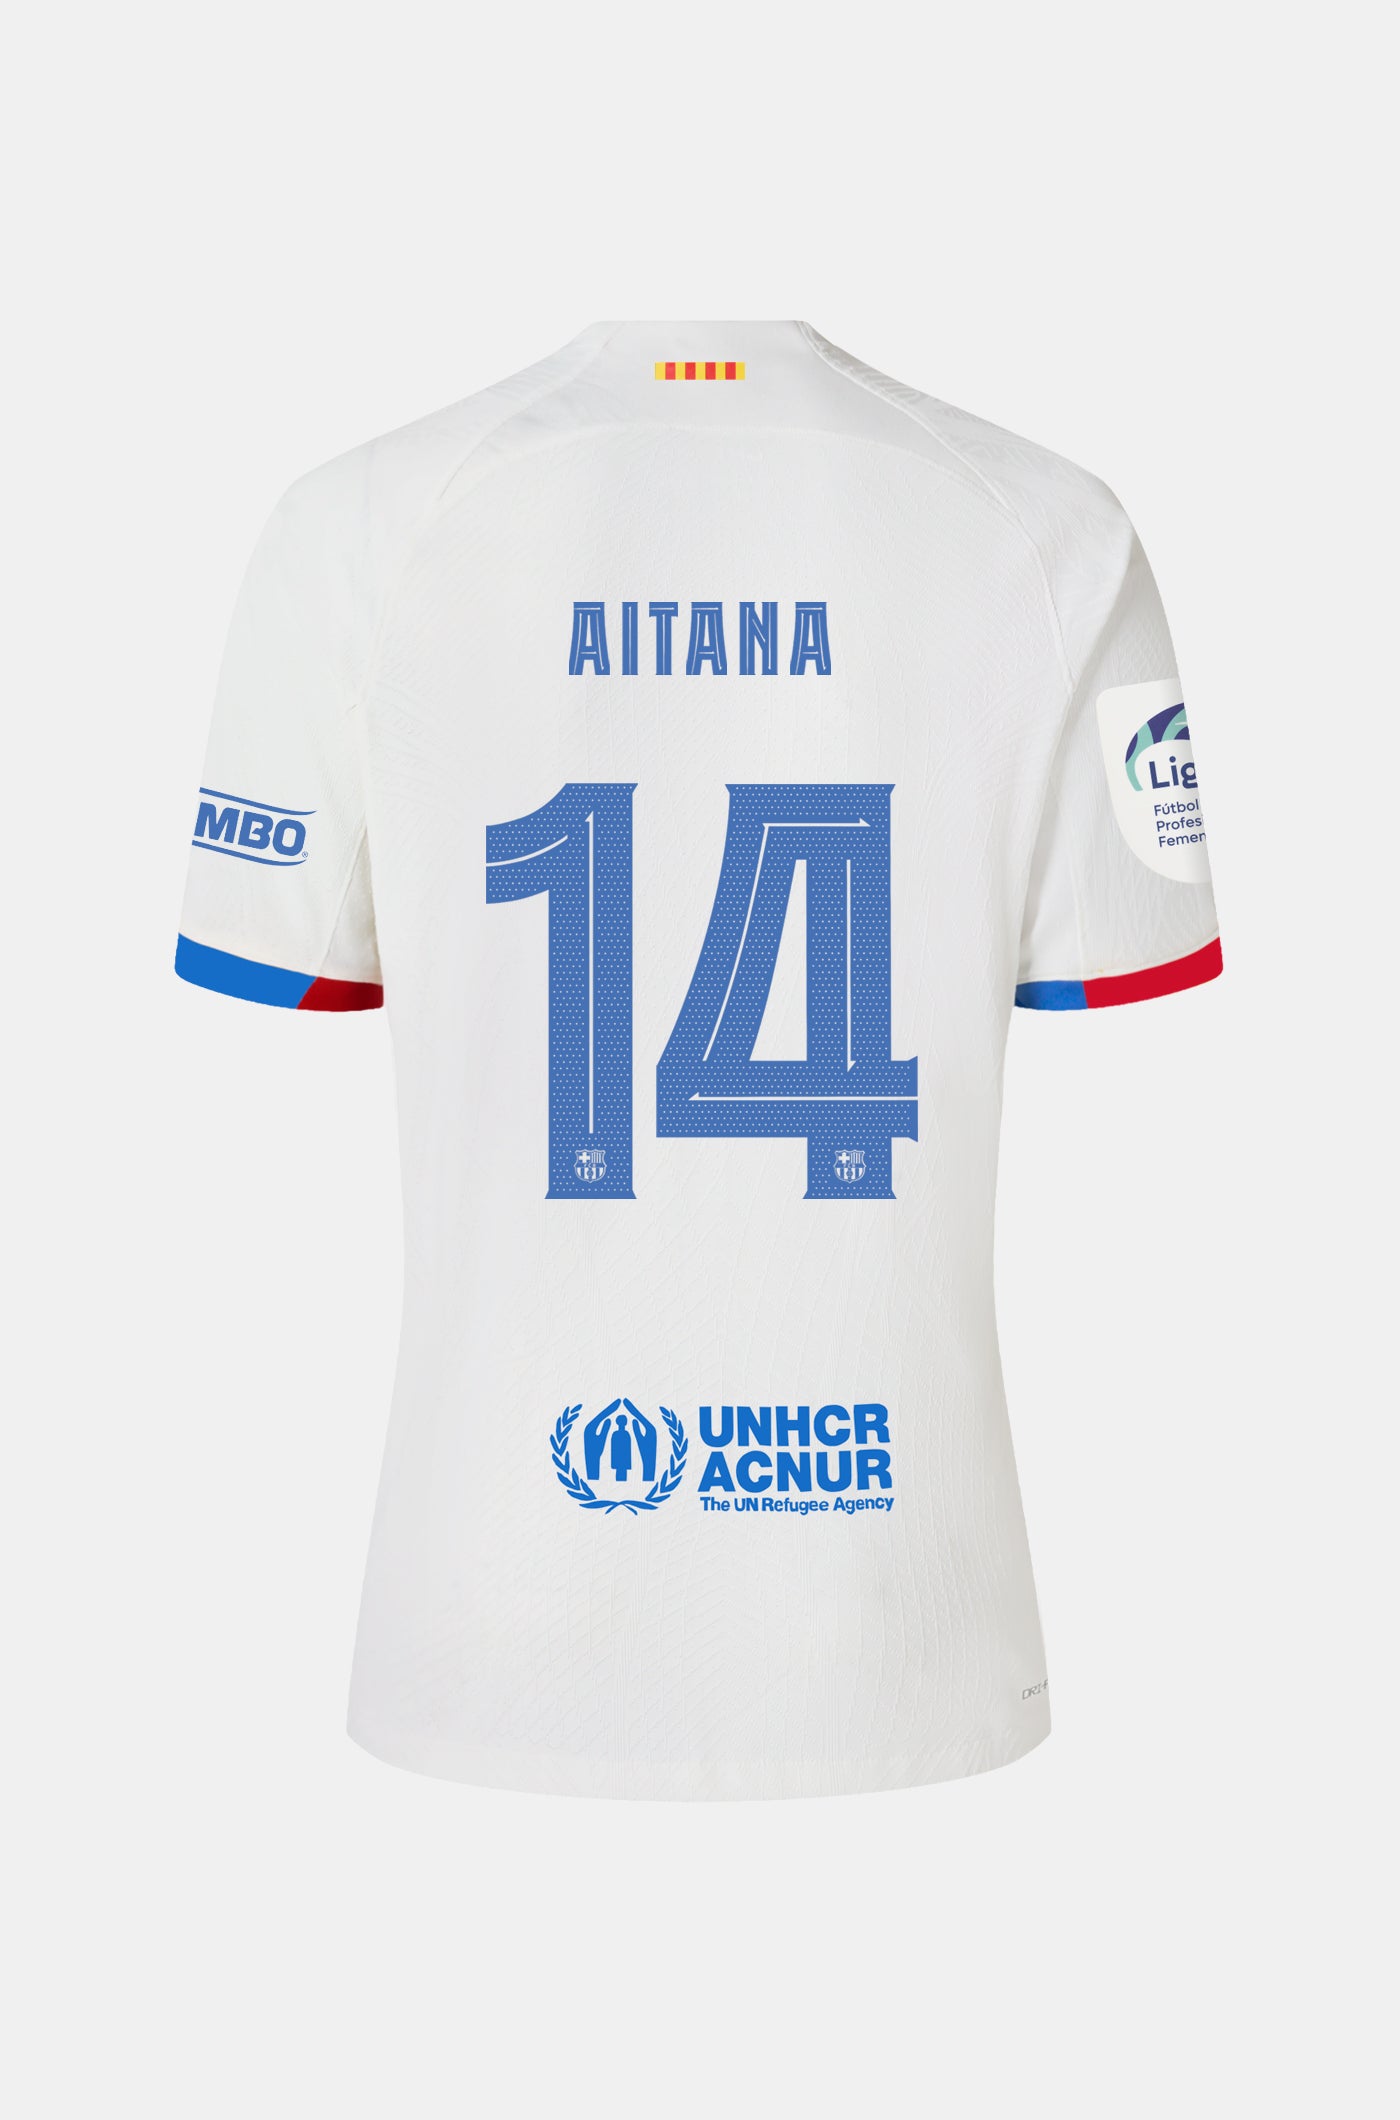 Liga F FC Barcelona Away Shirt 23/24 Player’s Edition - Women  - AITANA